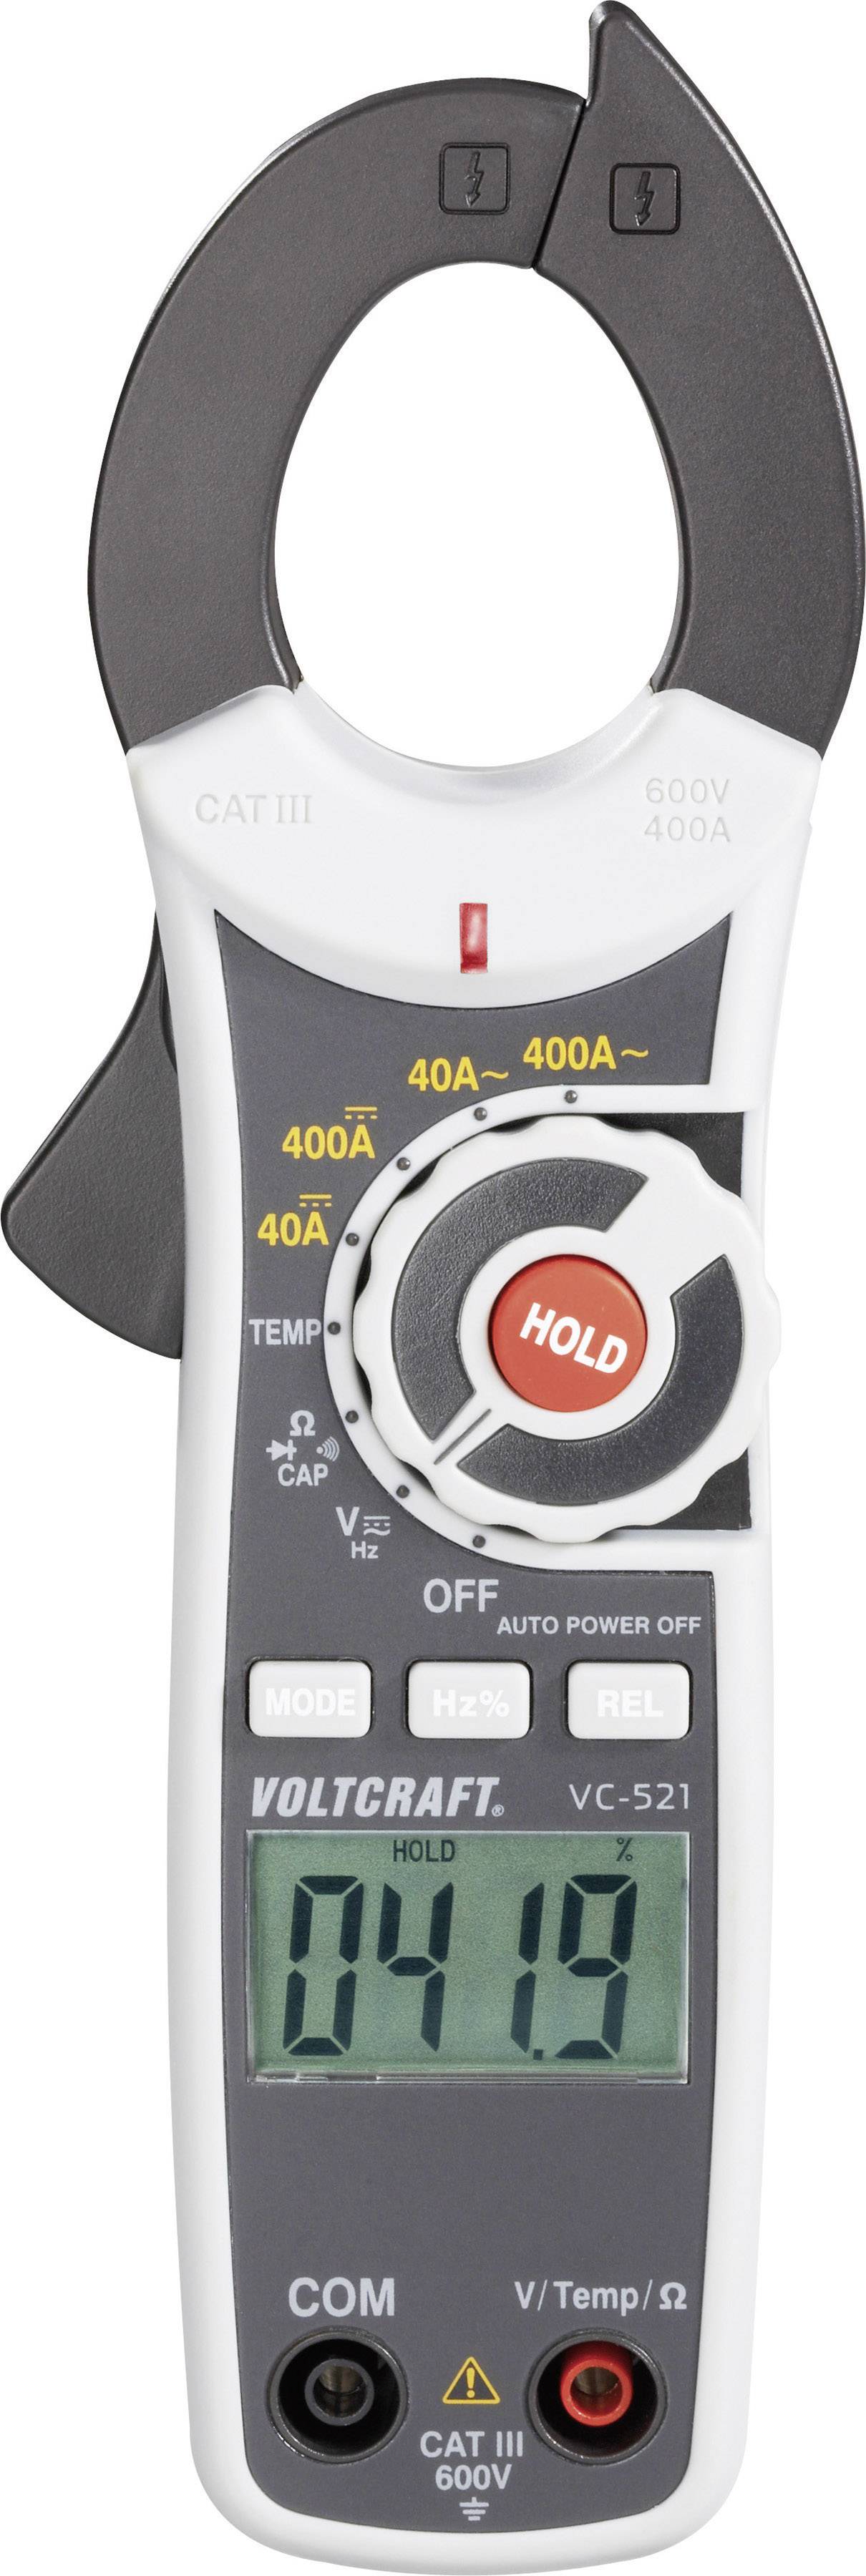 Voltcraft ® VC-521 Mini Digital AC/DC Clamp medidor